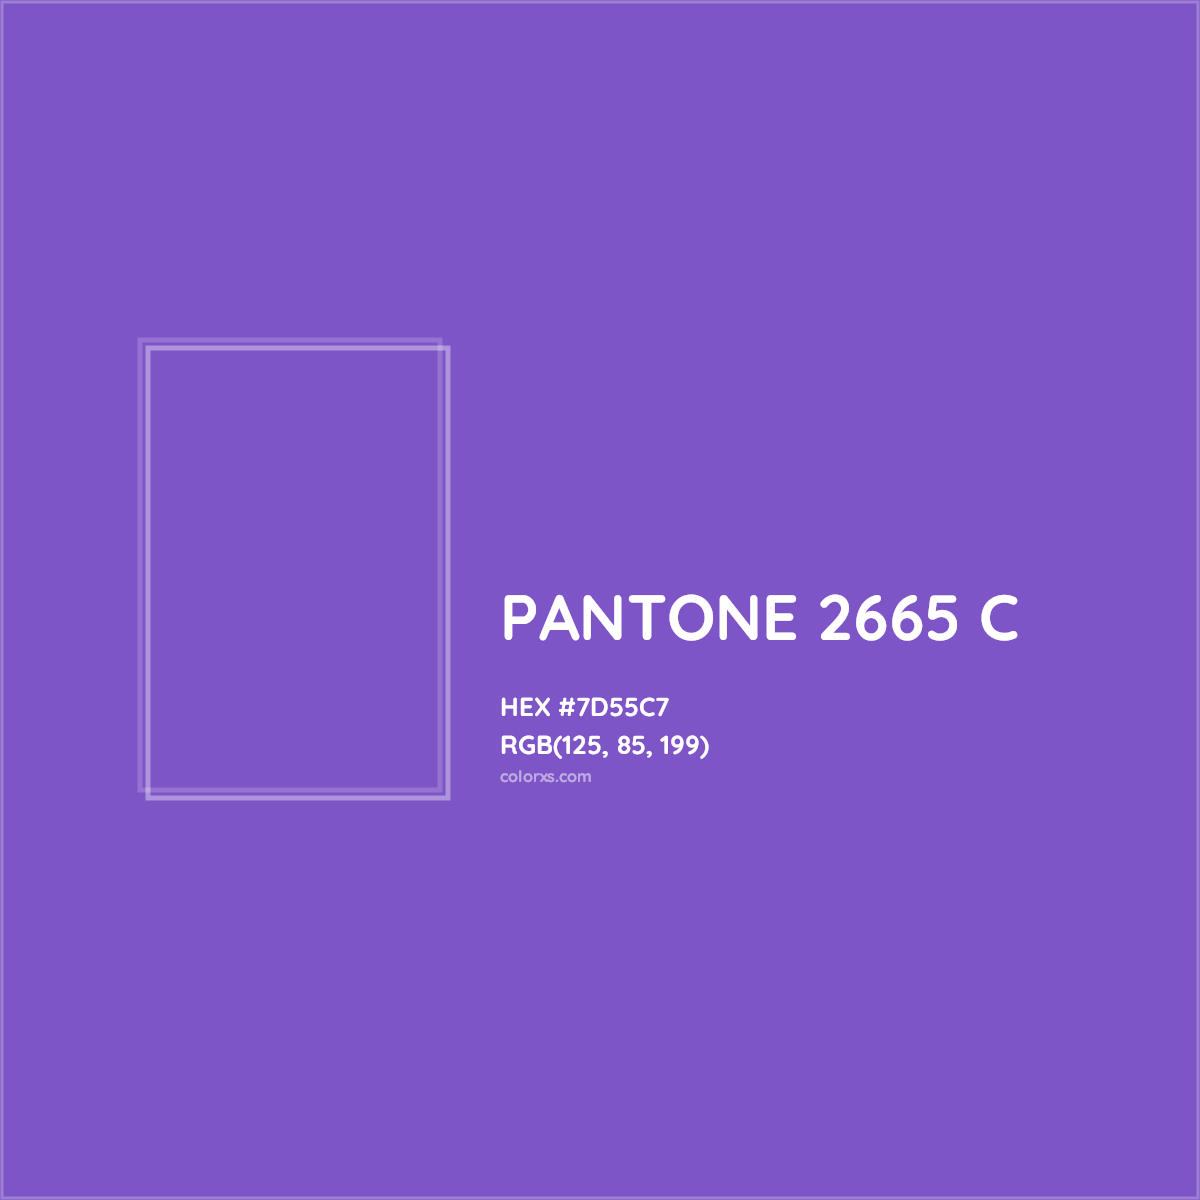 HEX #7D55C7 PANTONE 2665 C CMS Pantone PMS - Color Code